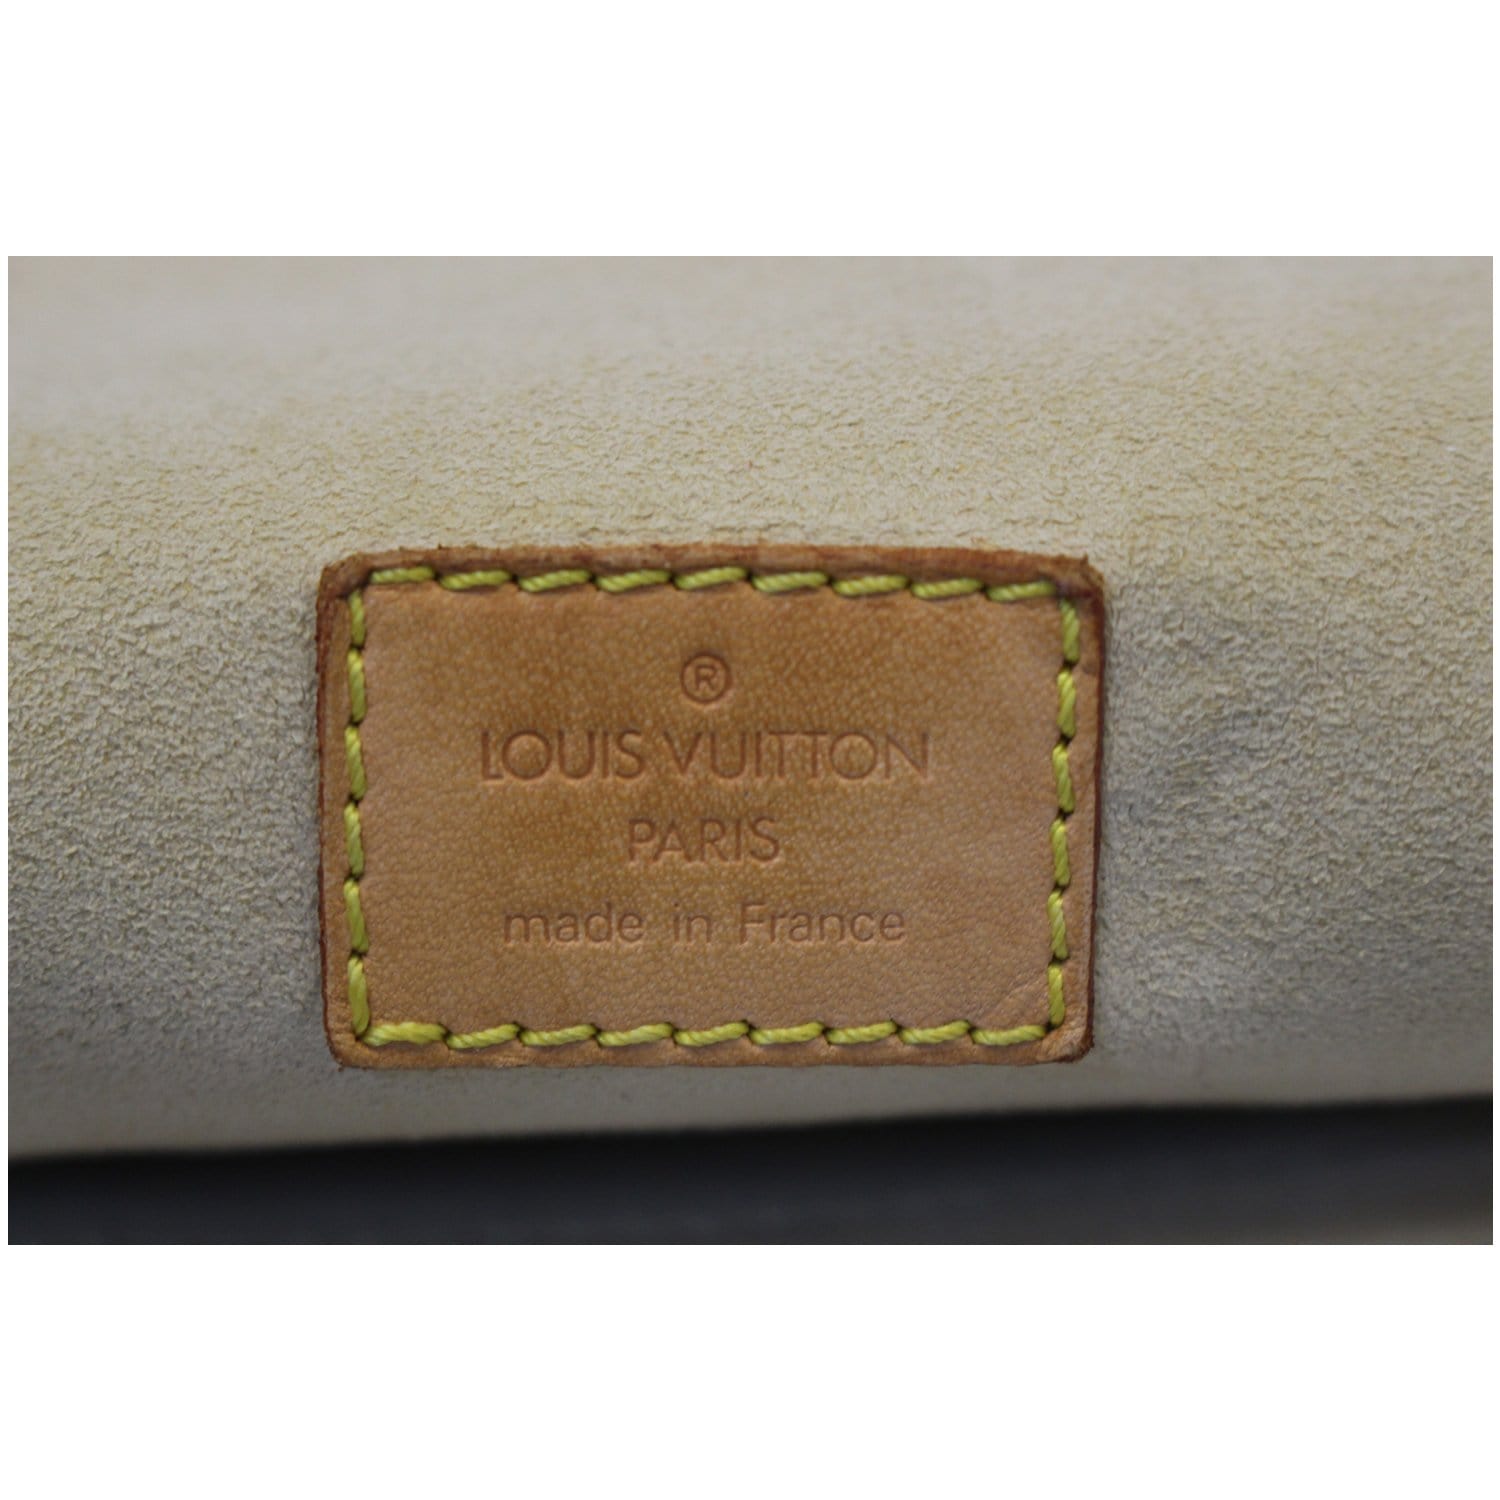 Louis Vuitton Hudson PM Brown Monogram Shoulder Bag 10879